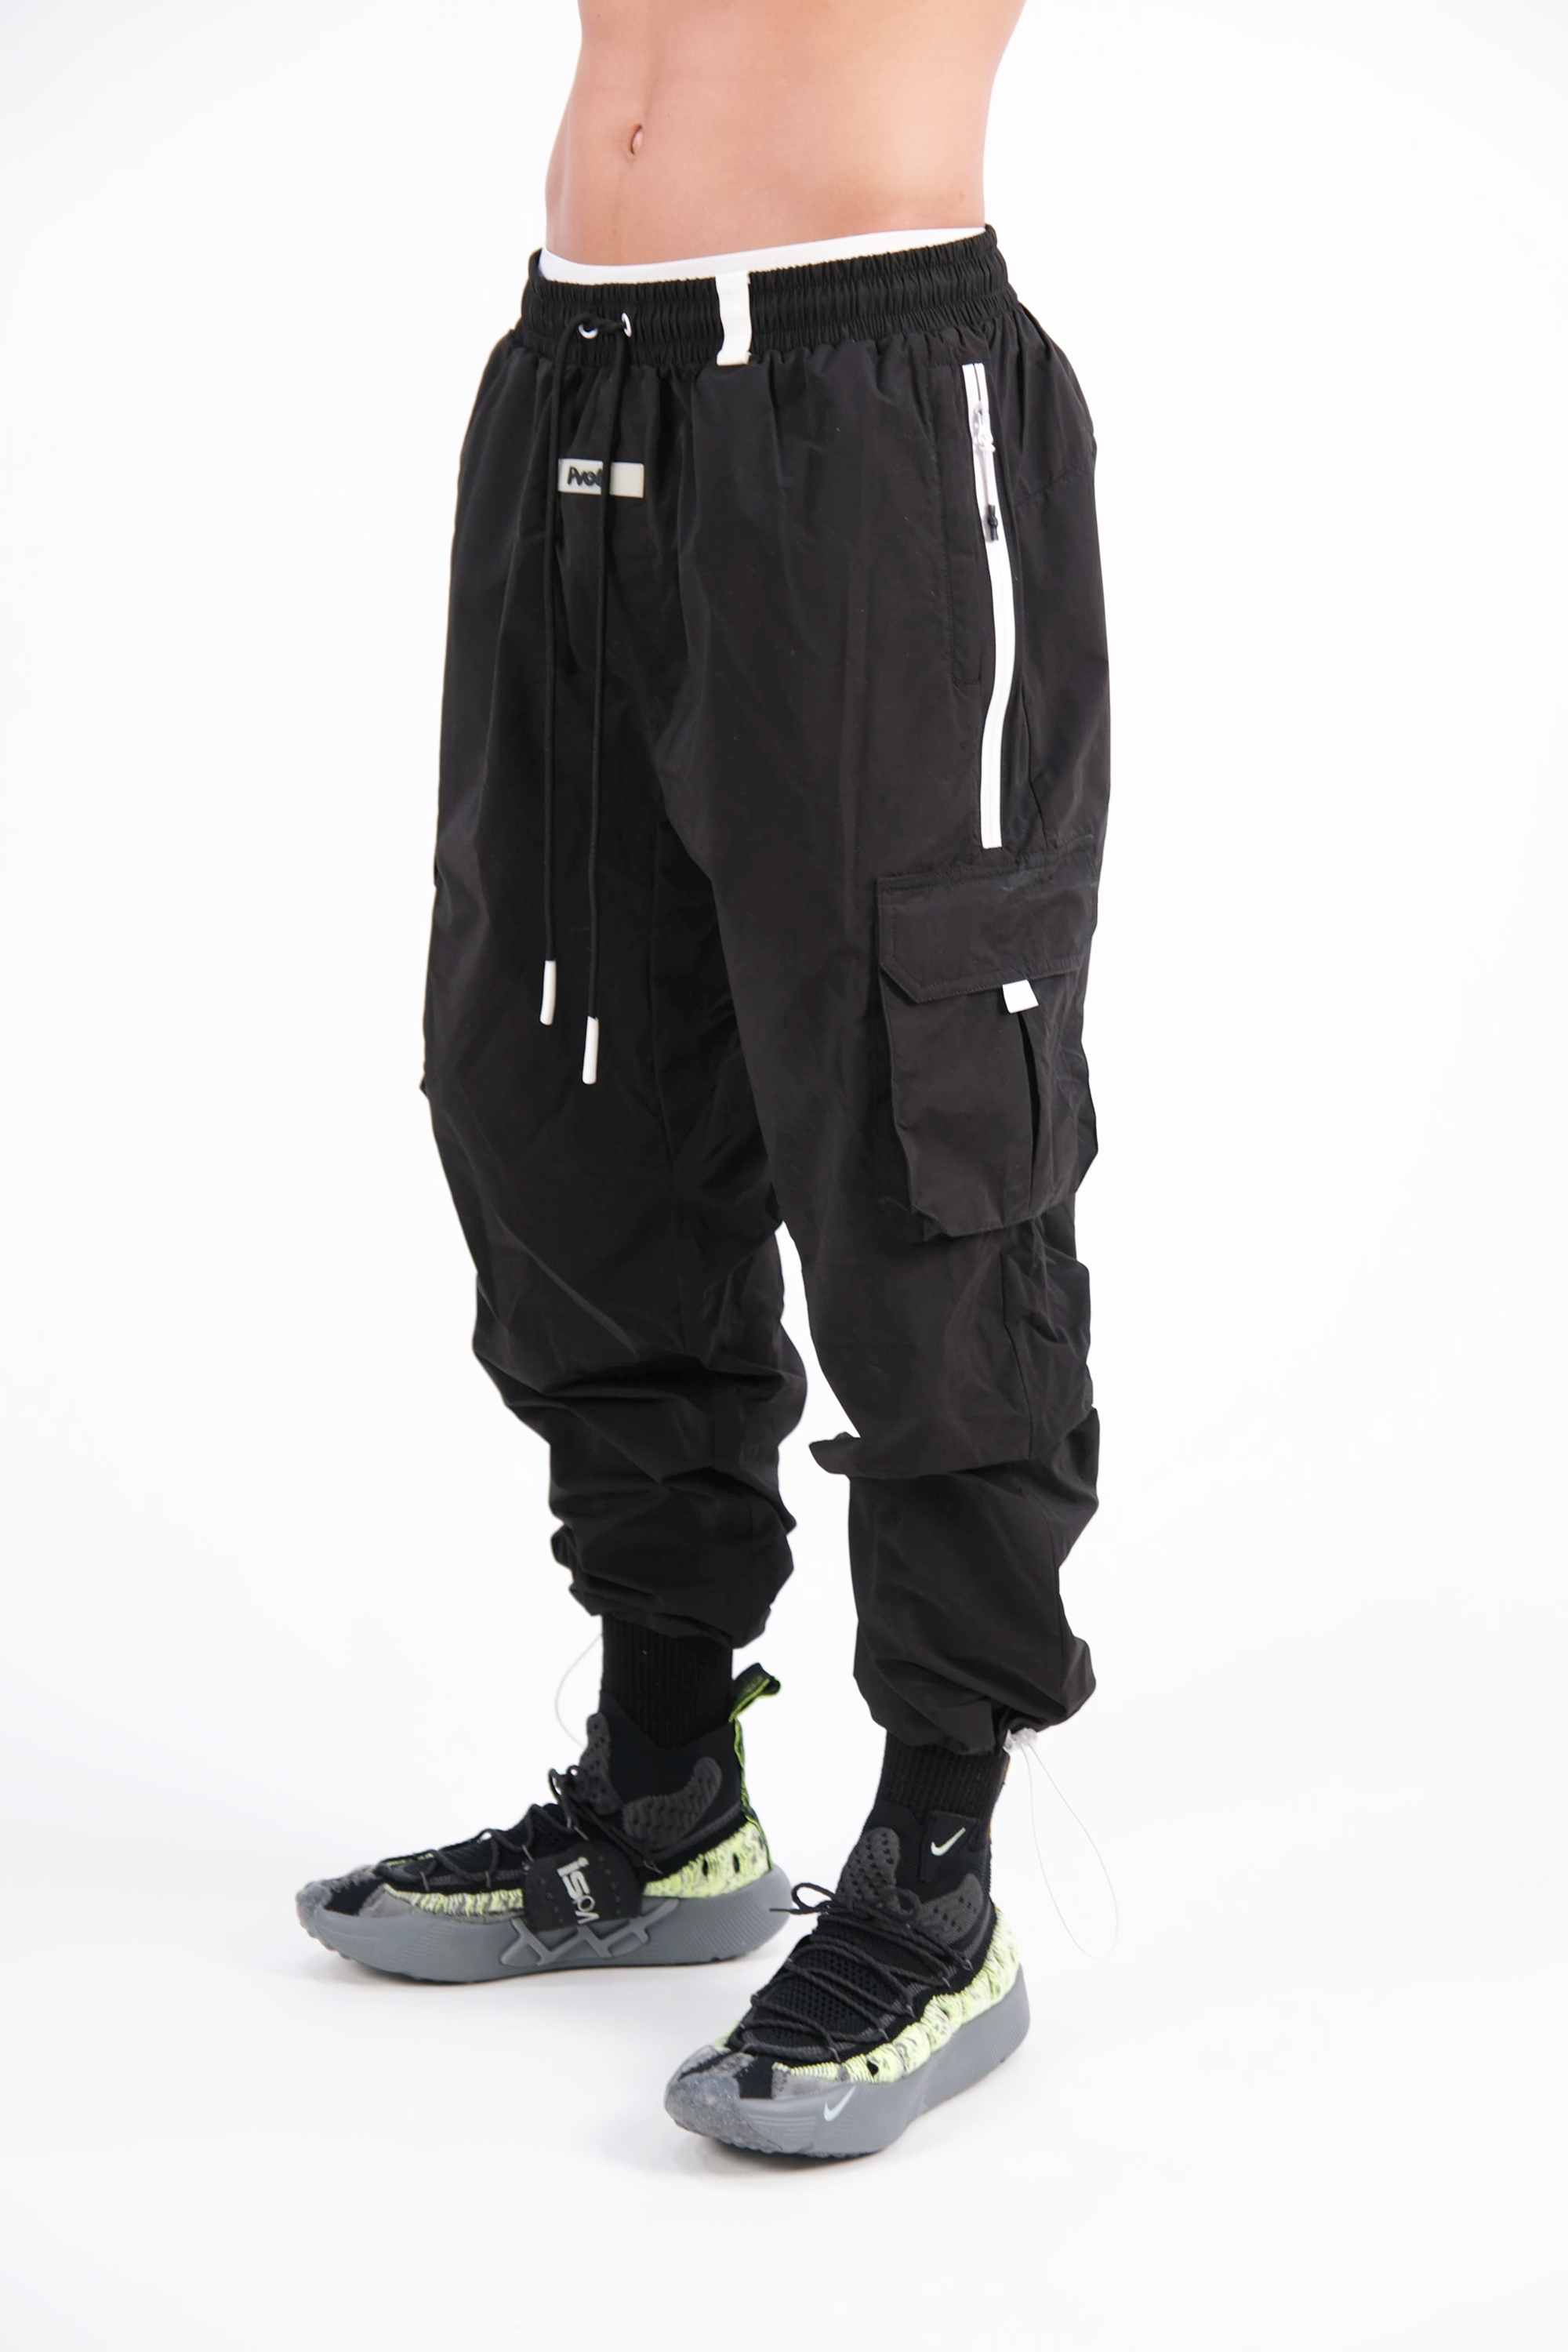 PVOT Premium Sweat Pants (Black)12000円程しました - その他